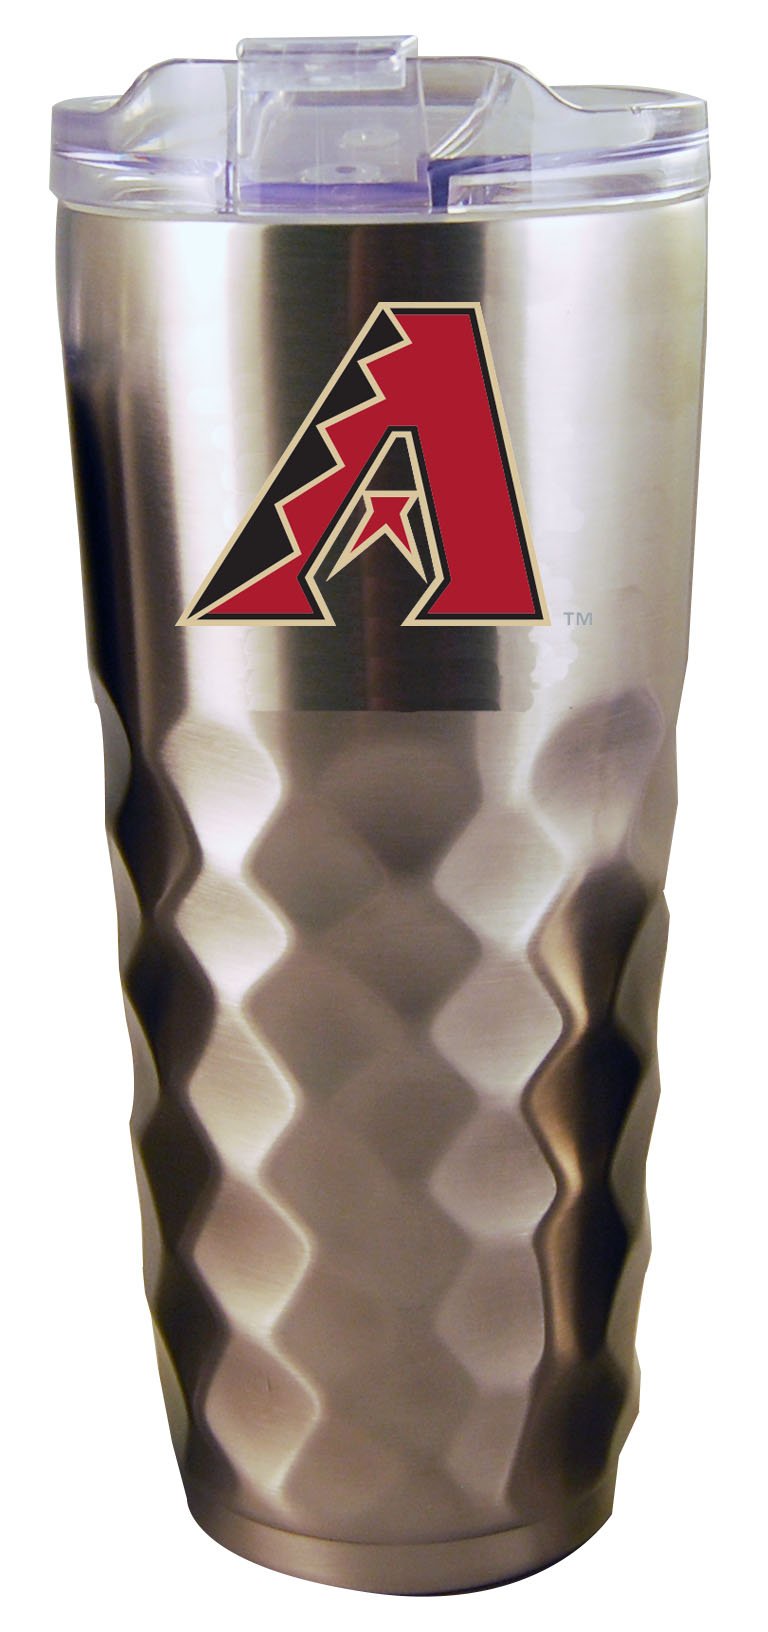 32oz Stainless Steel Diamond Tumbler | Arizona Diamondbacks
ADB, Arizona Diamondbacks, CurrentProduct, Drinkware_category_All, MLB
The Memory Company